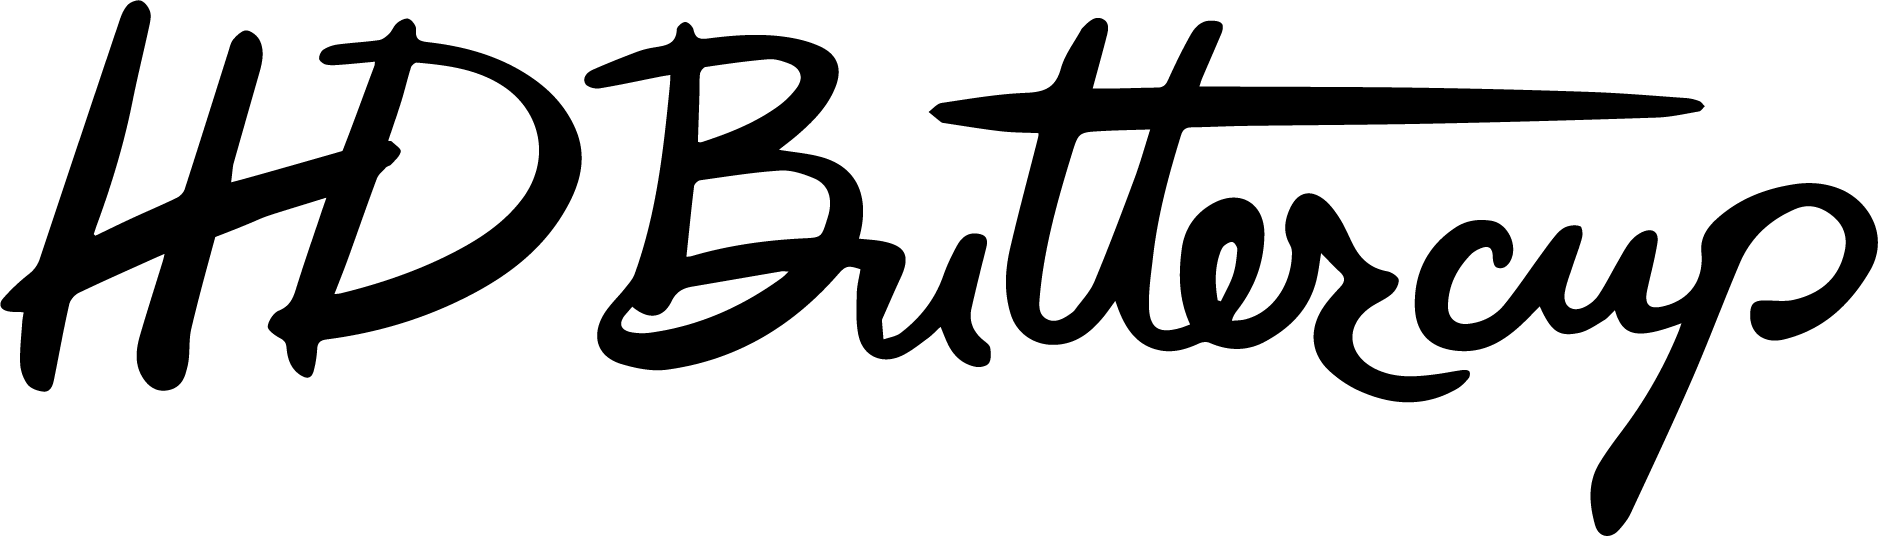 HD Buttercup Logo